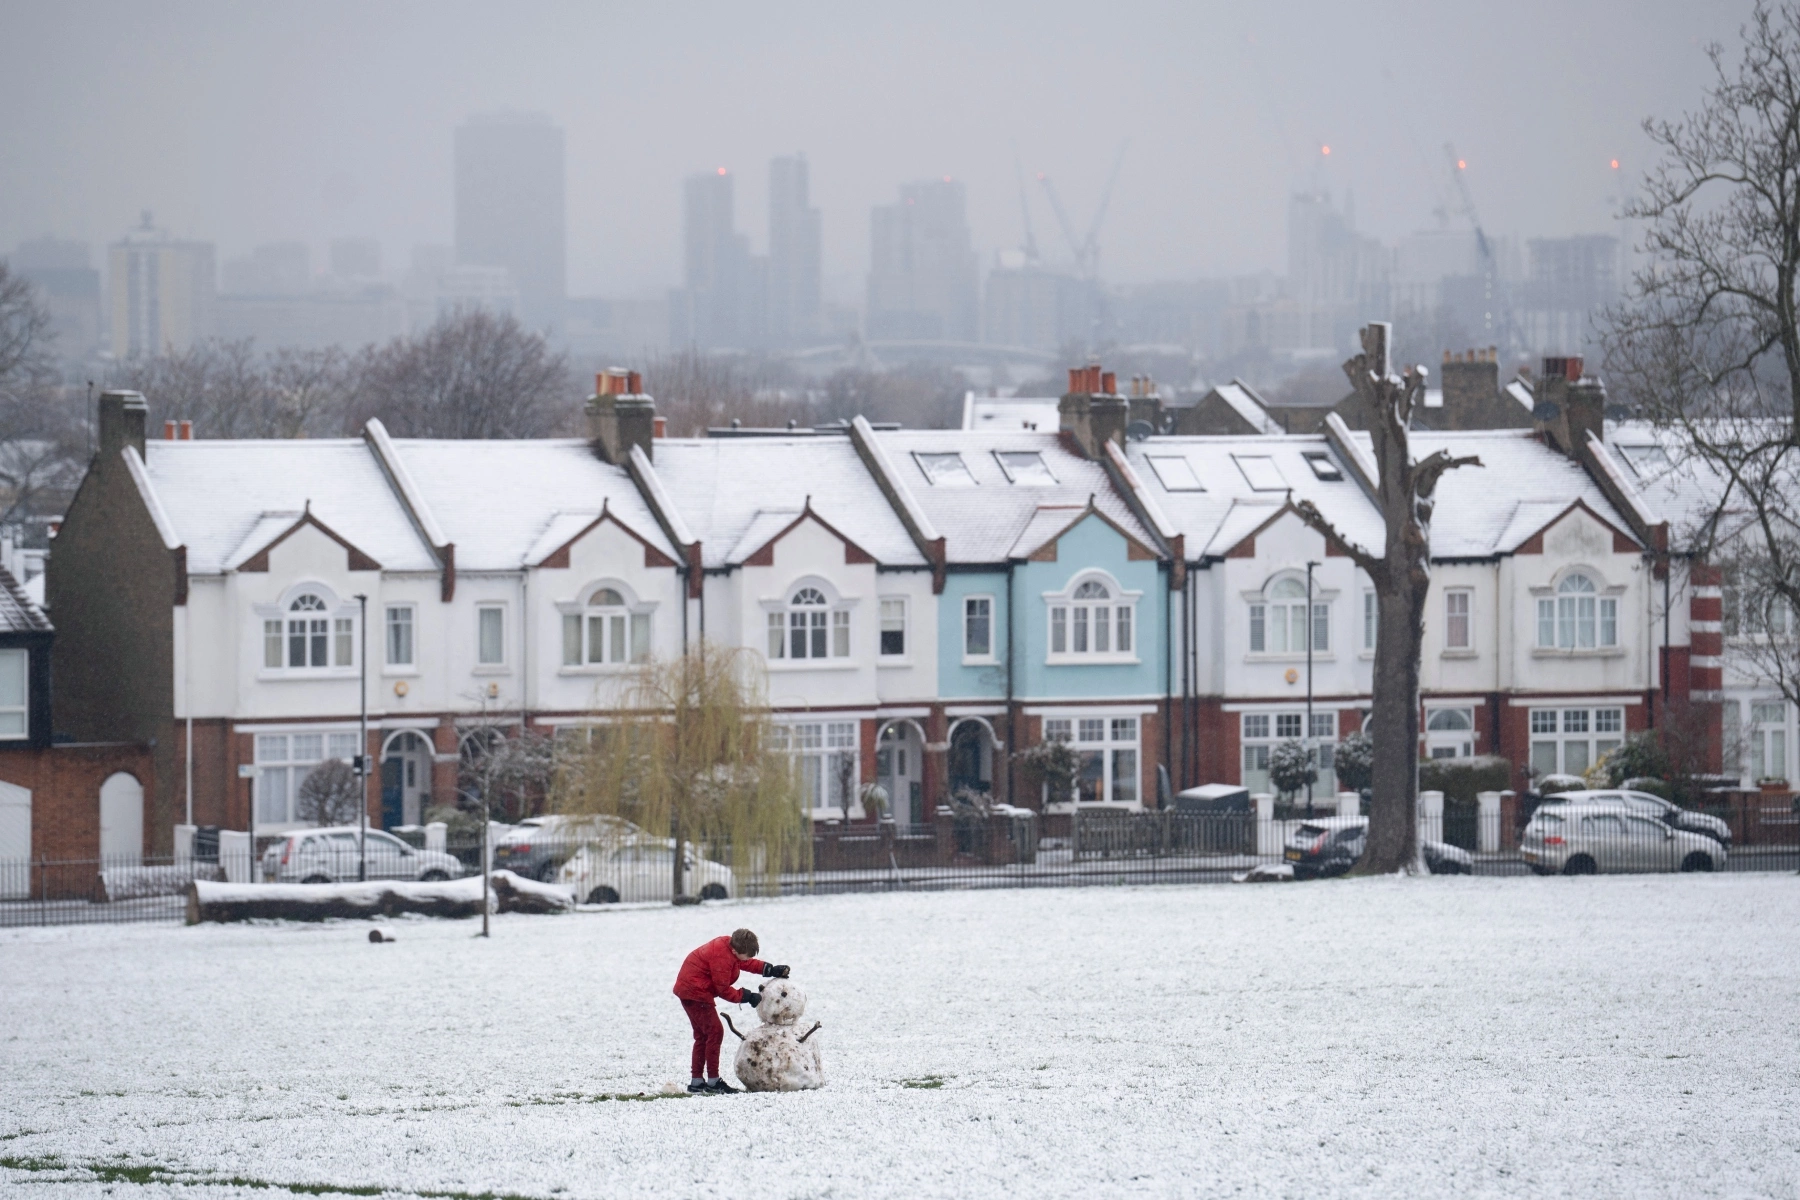 Man building snowman in Lambeth in snowy park